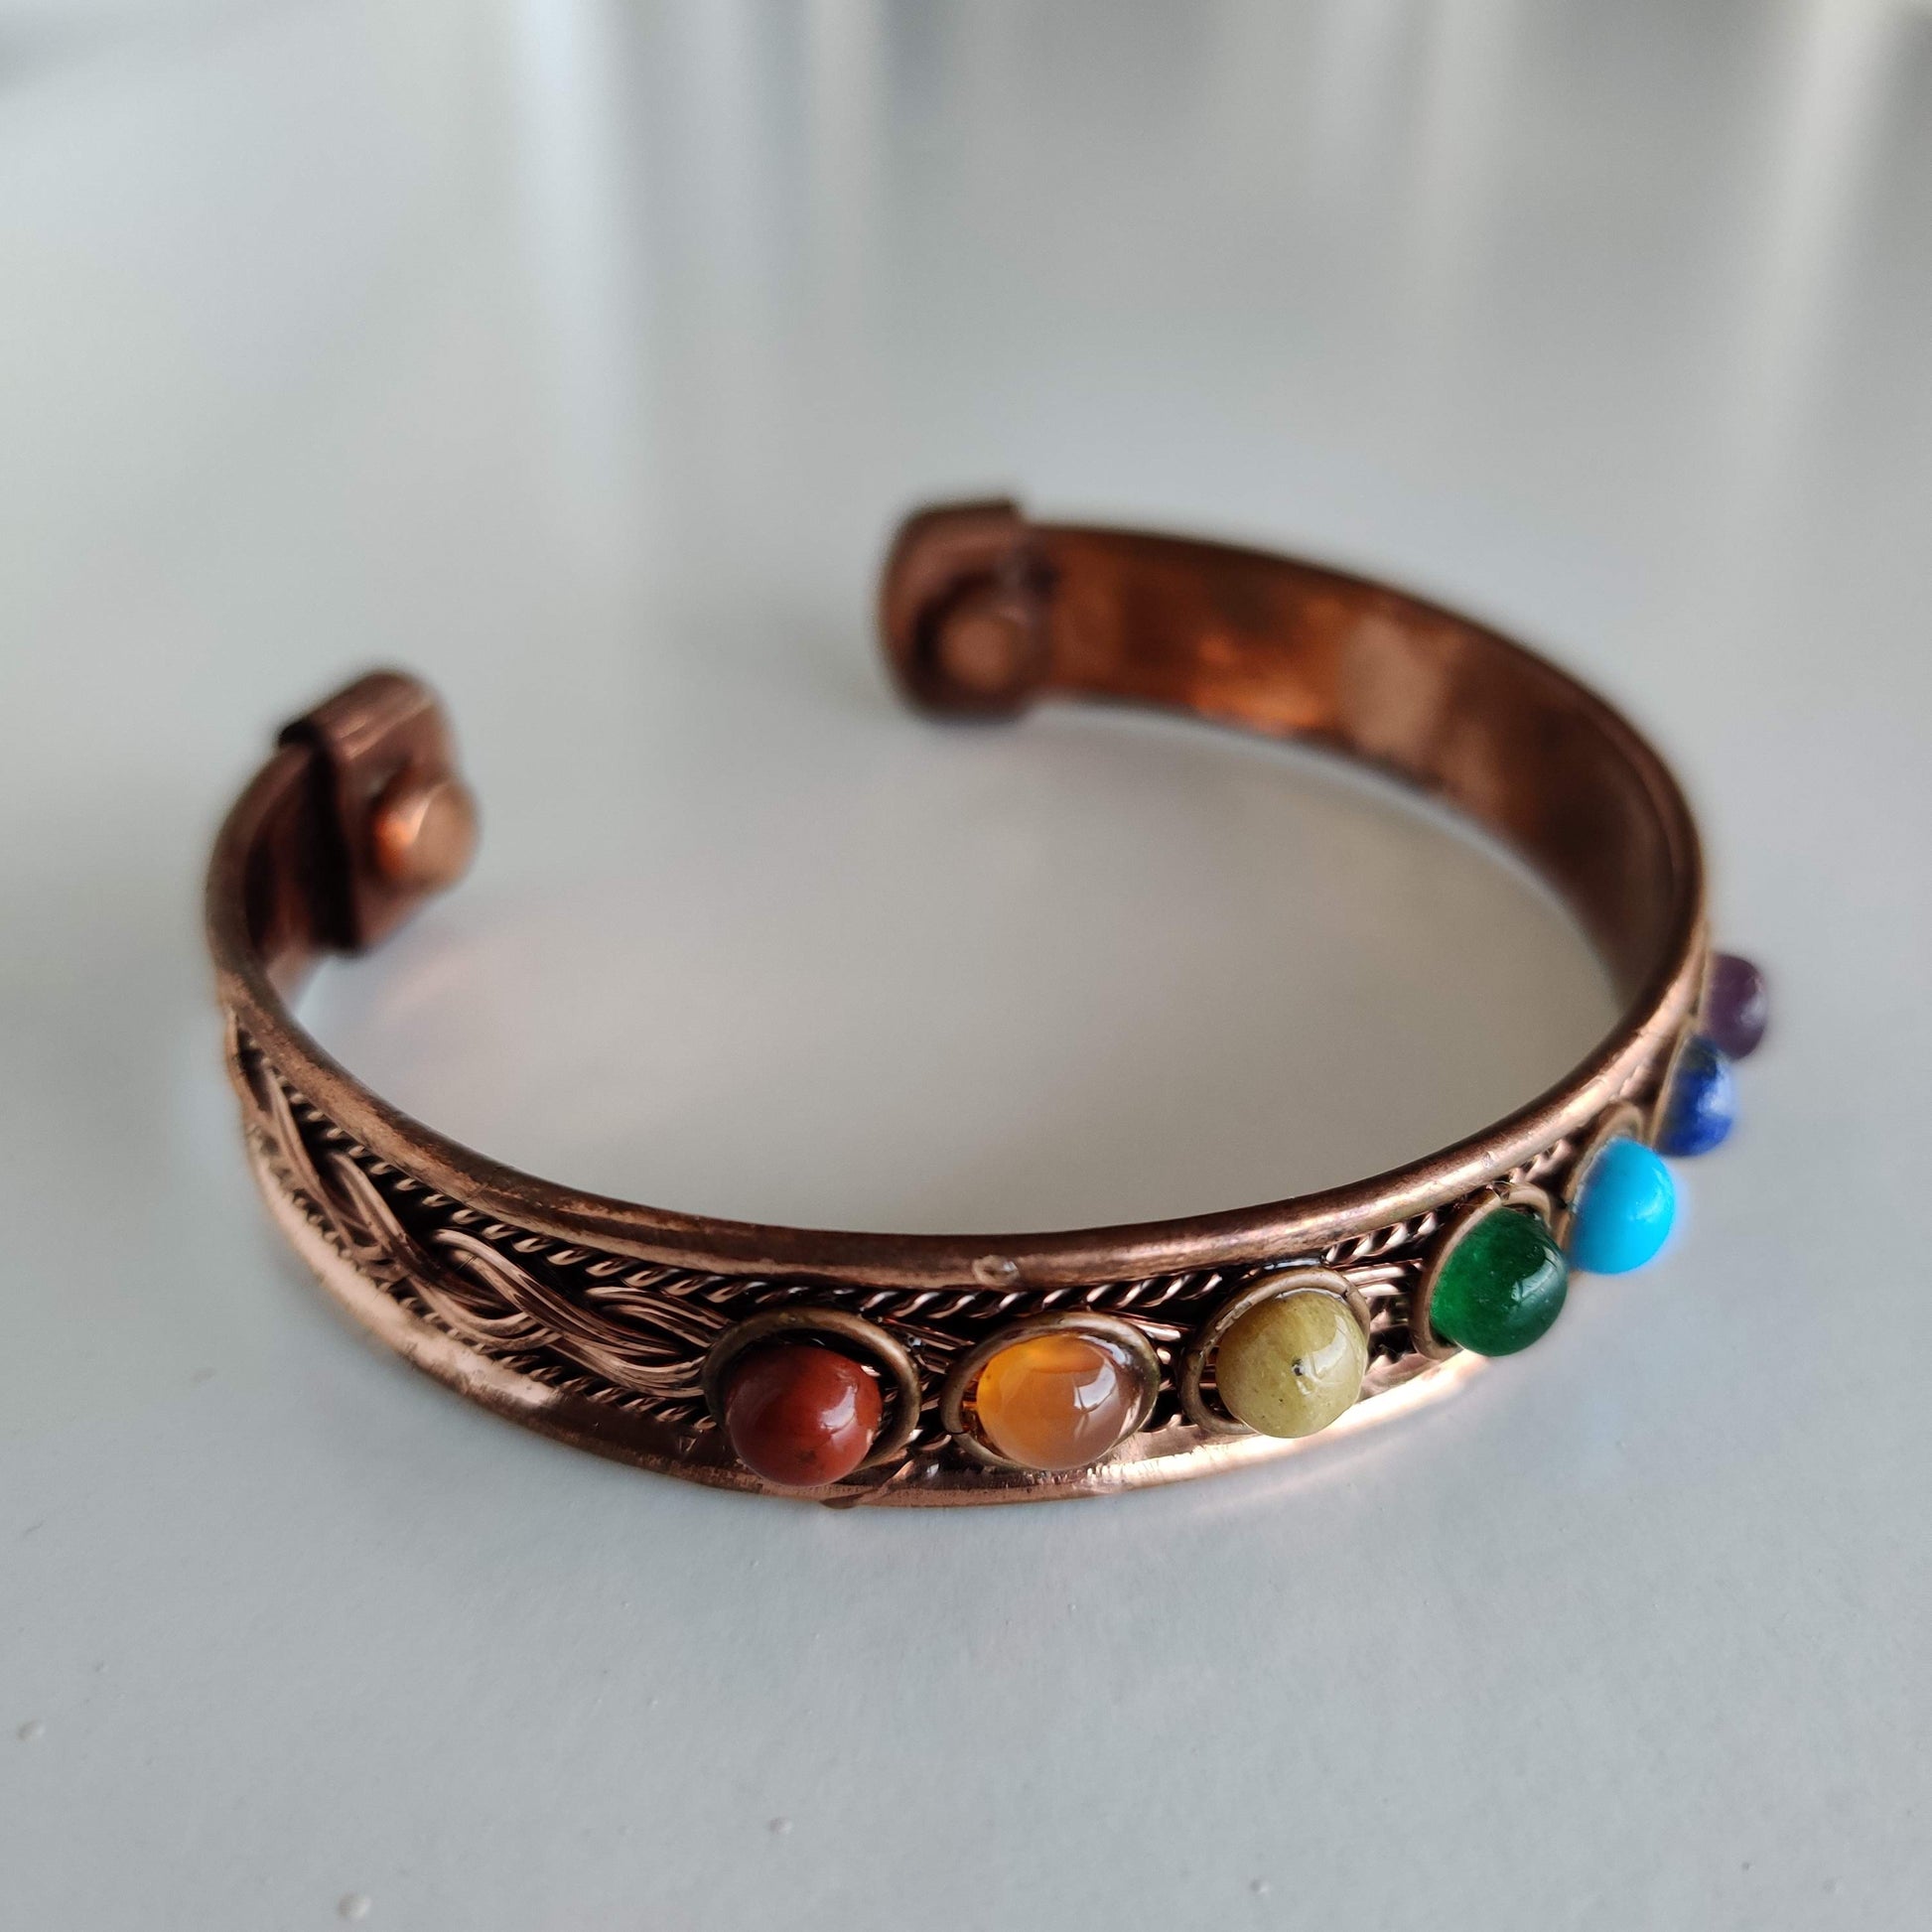 Chakra Copper Magnetic Bracelet with Woven Pattern - Rivendell Shop